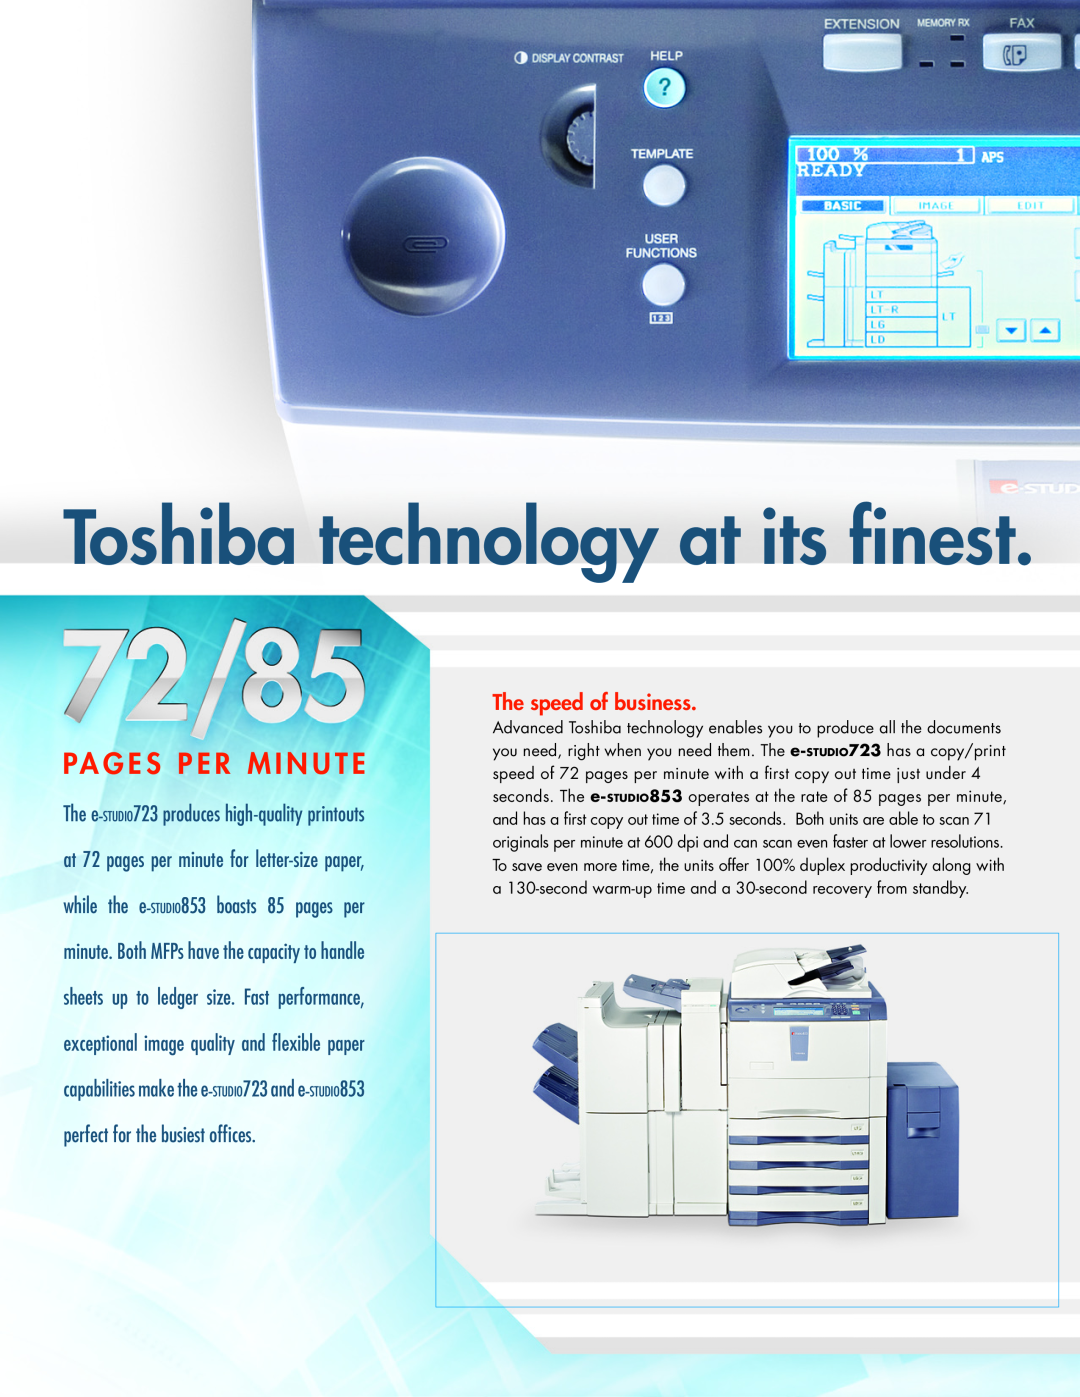 Toshiba eSTUDIO 723, eSTUDIO 853 manual The speed of business, Toshiba technology at its finest, Pa G E S P E R M I N U T E 